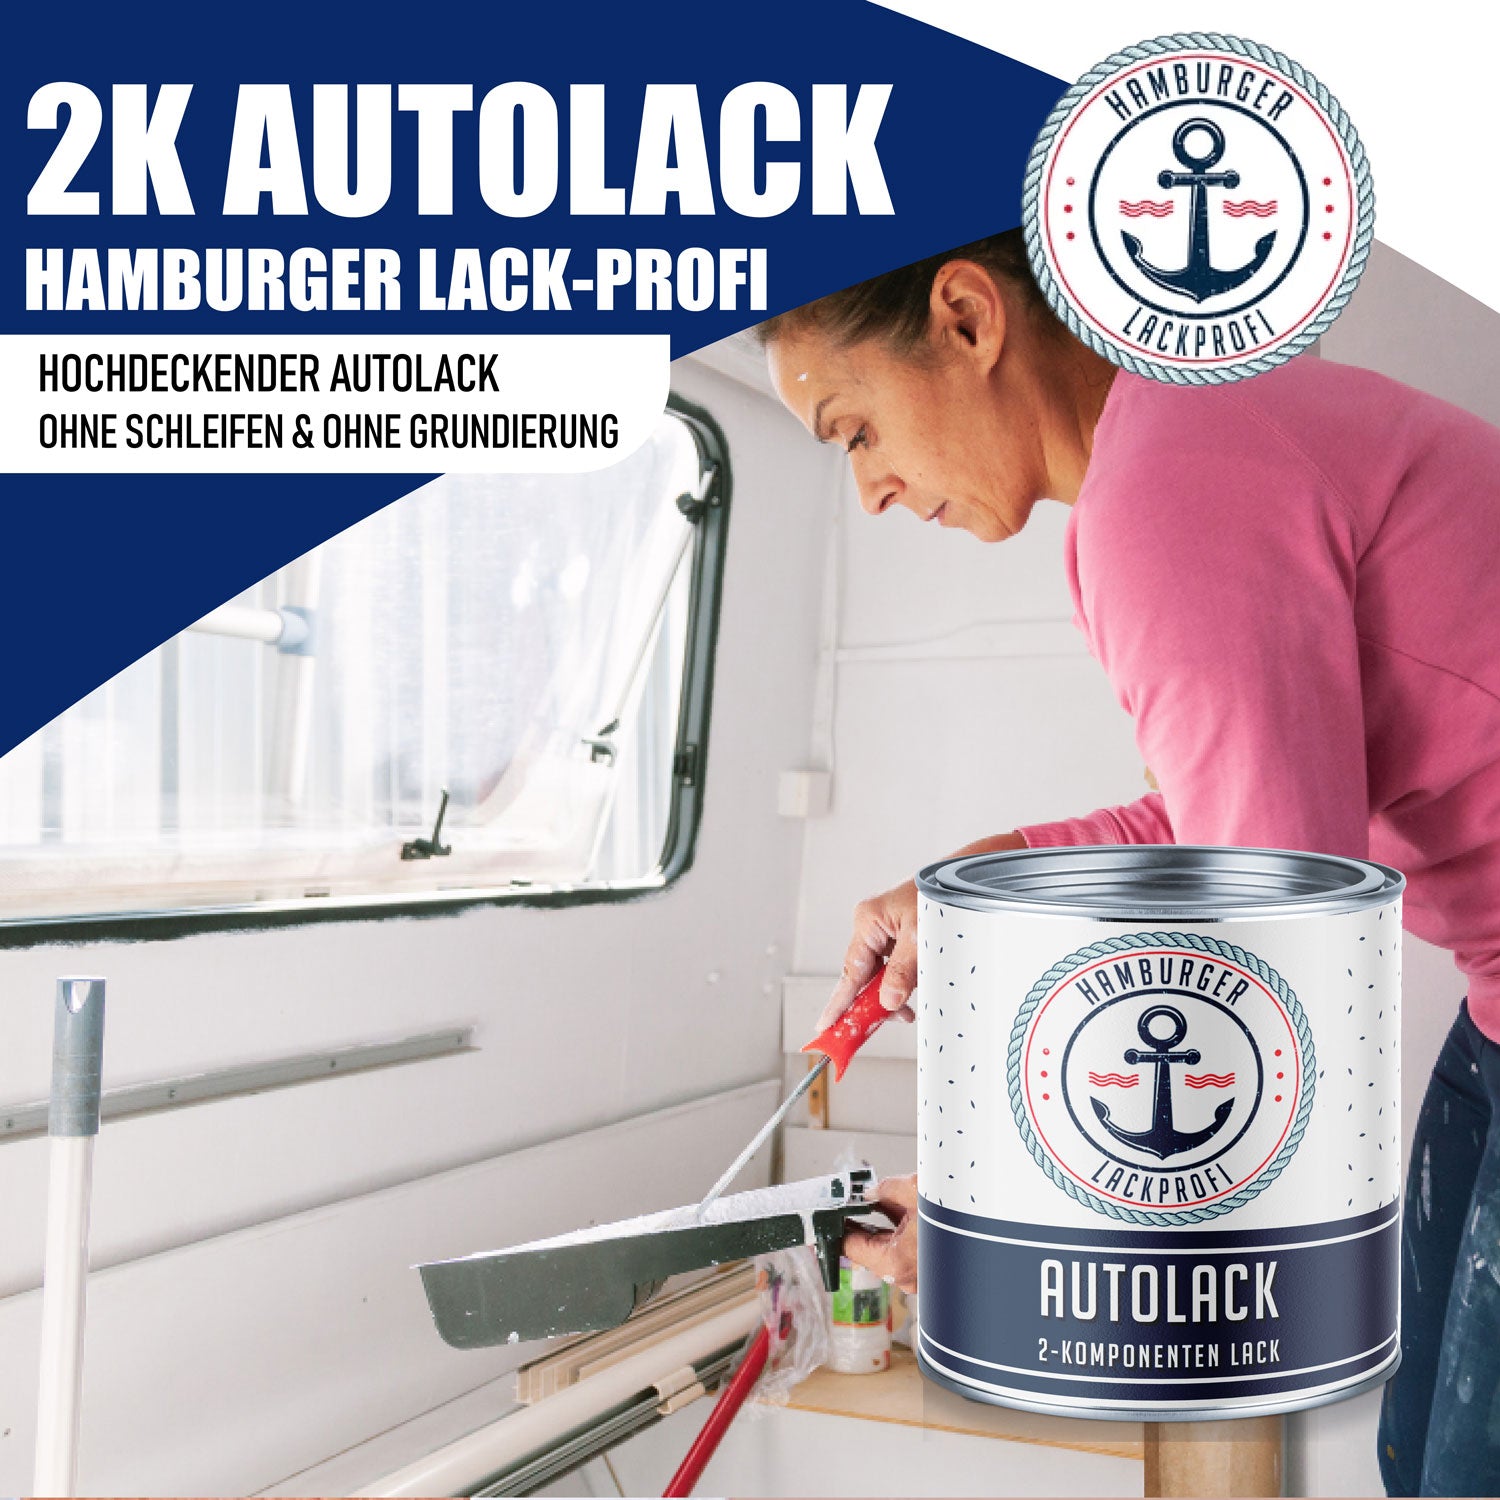 Hamburger Lack-Profi 2K Autolack in Blaulila RAL 4005 mit Lackierset (X300) & Verdünnung (1 L) - 30% Sparangebot